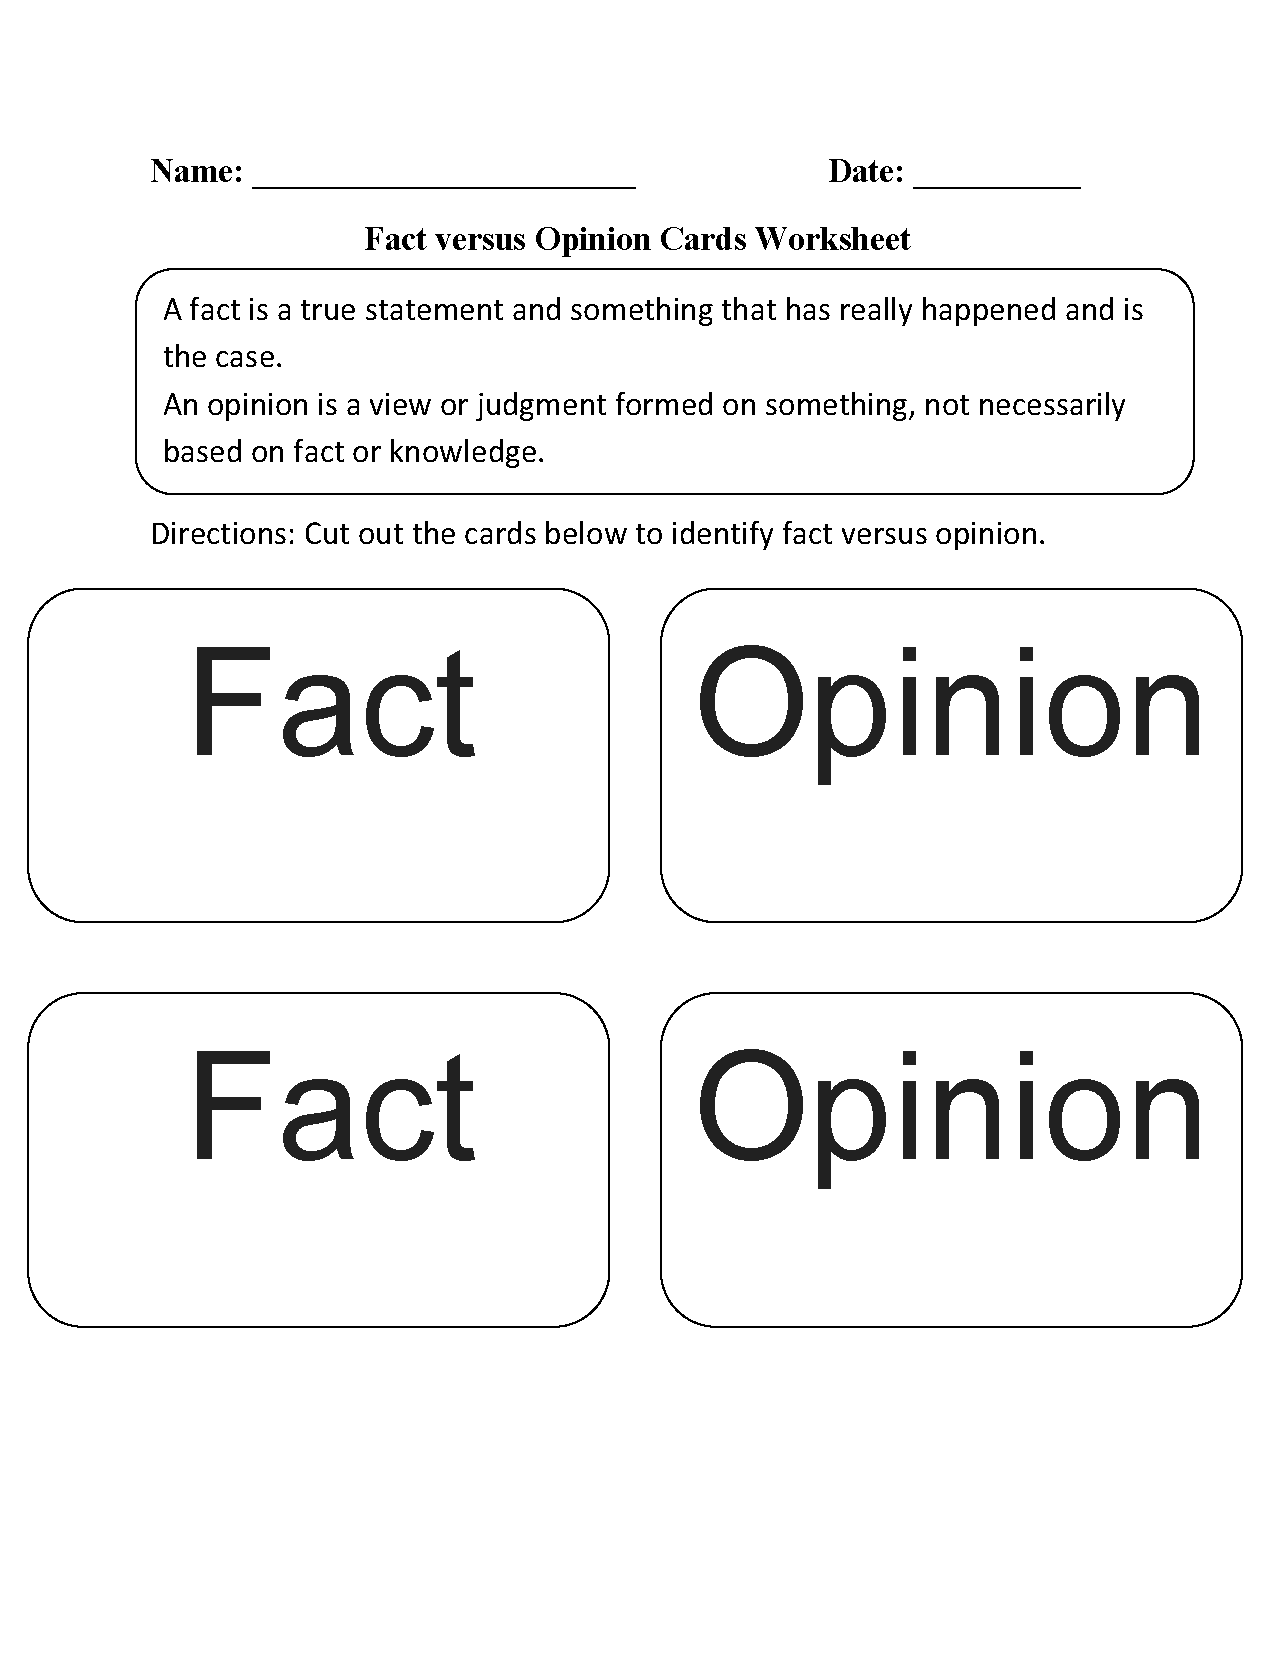 Fact versus Opinion Cards Worksheet